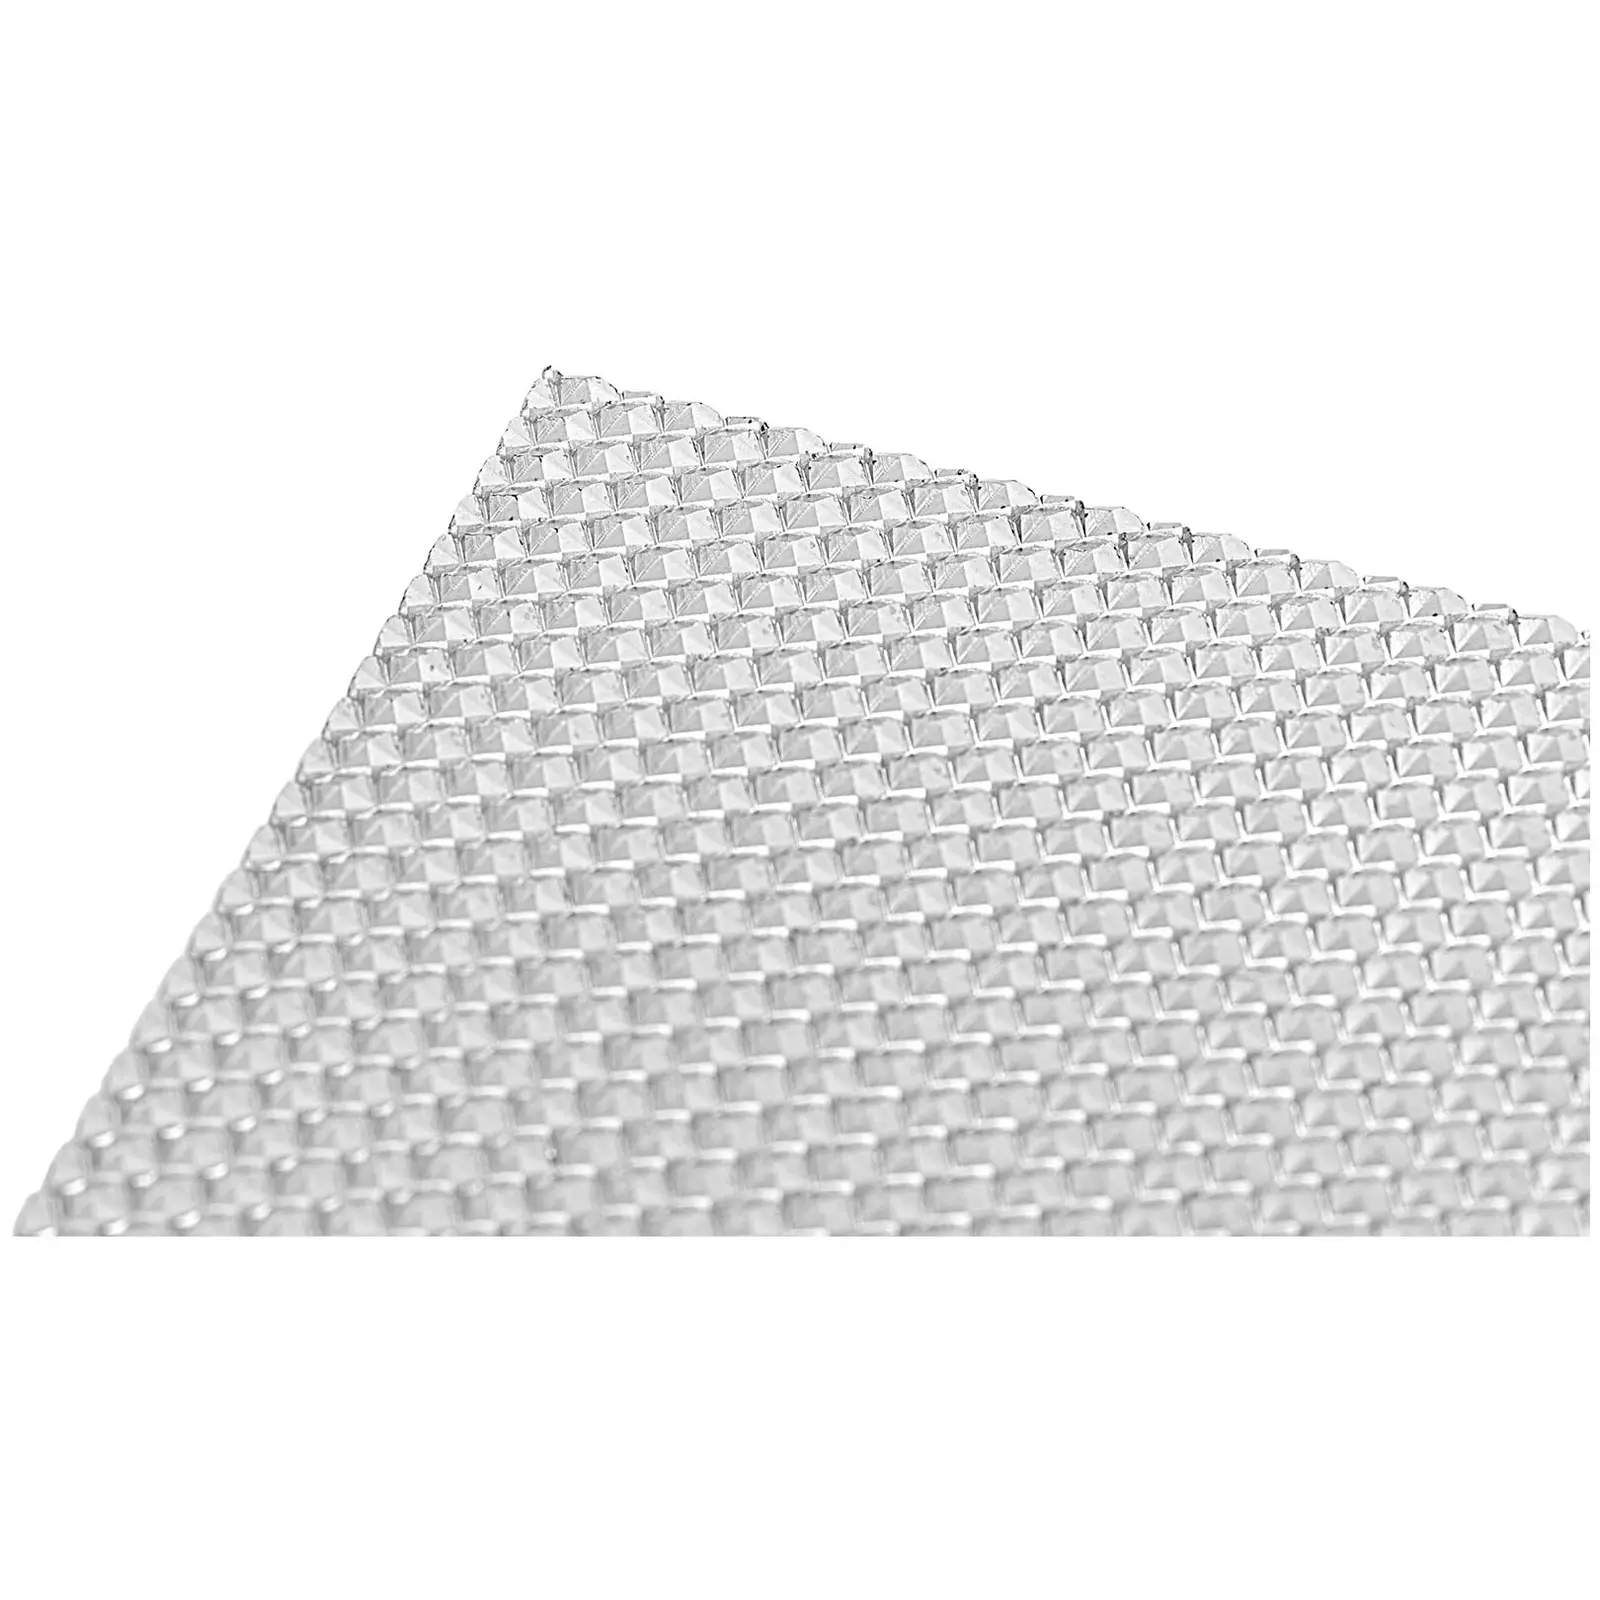 Mittelwandgießform - 42 x 25 cm - 5,4 mm Waben - Edelstahl / Aluminium / Kunststoff